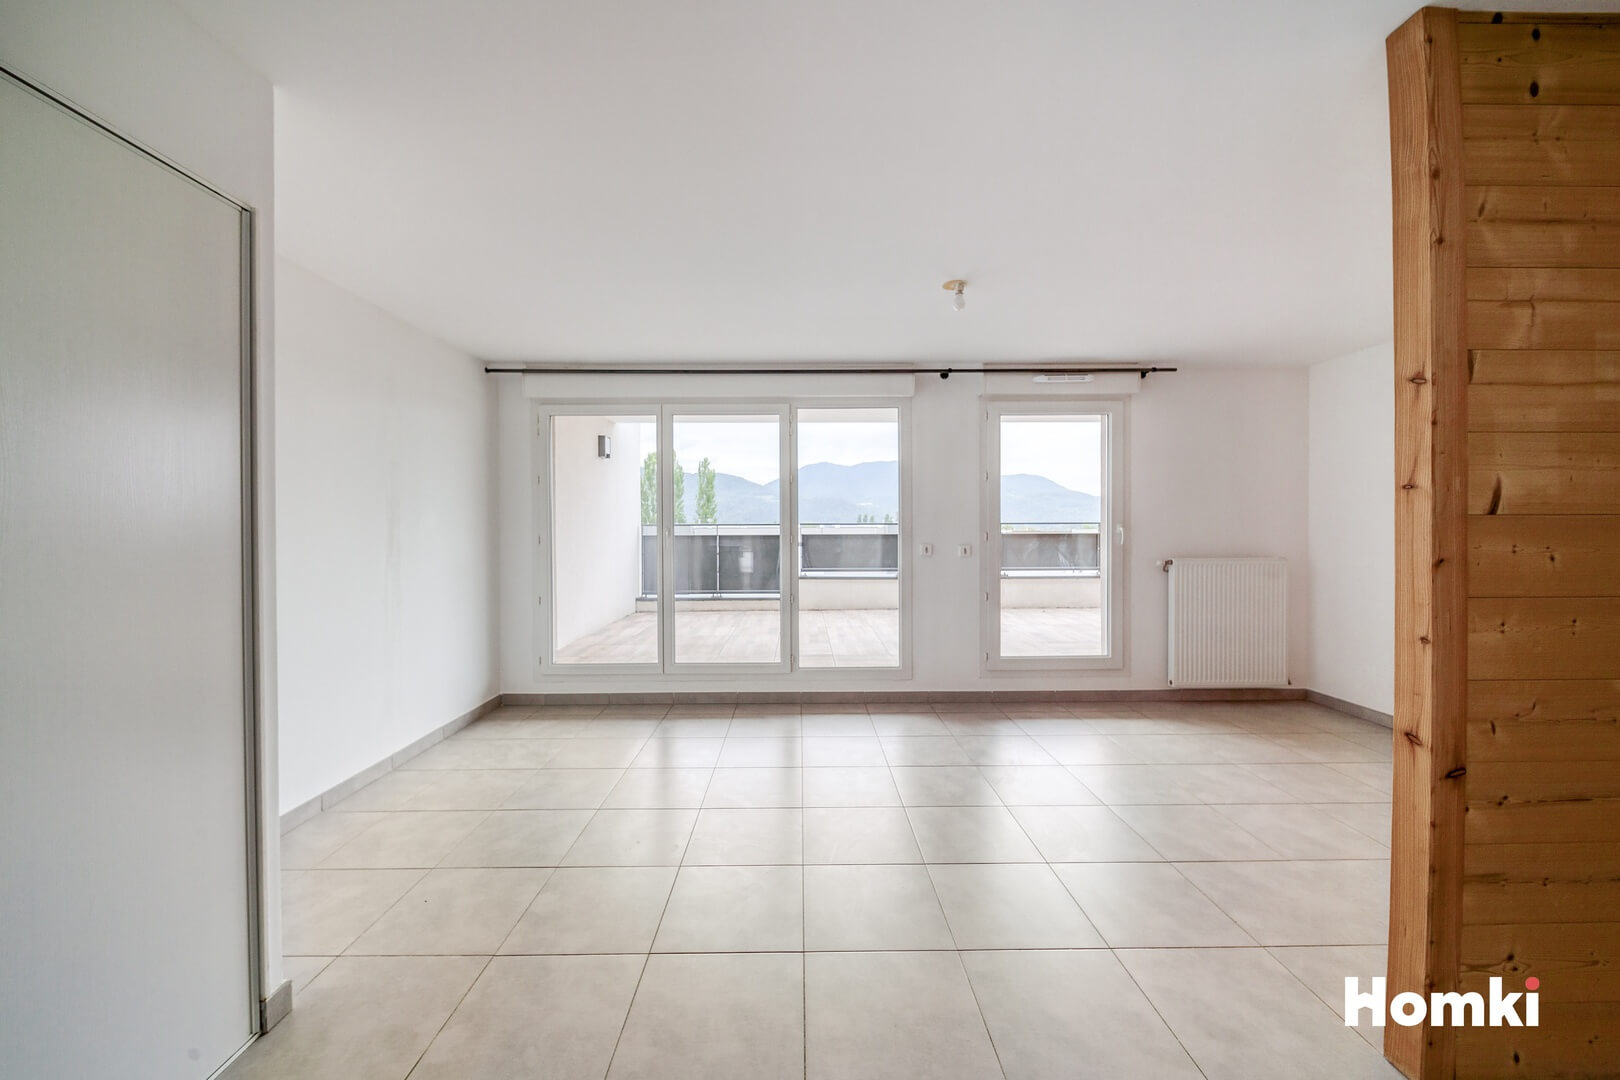 Homki - Vente Appartement  de 76.0 m² à Meylan 38240